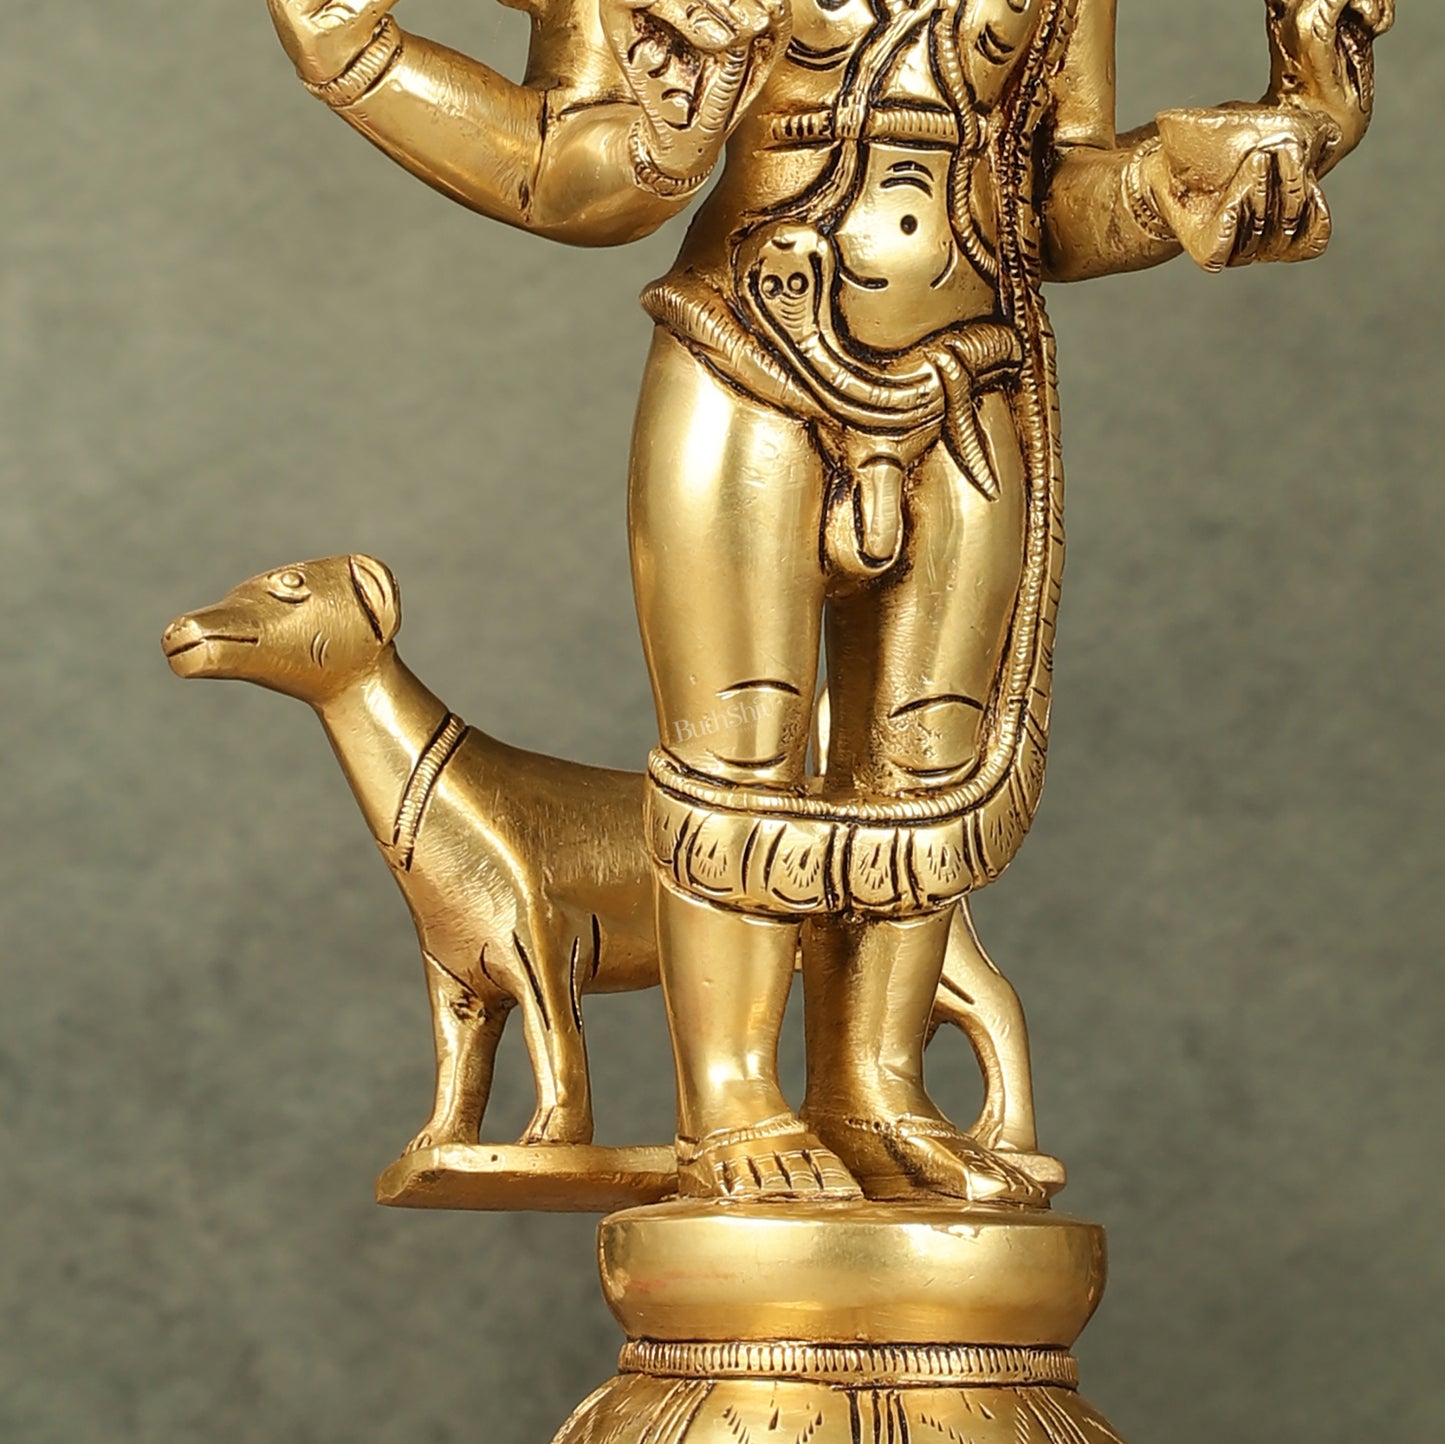 Superfine Brass Kaal Bhairava Bhairo Baba Idol with Dog 12 inch